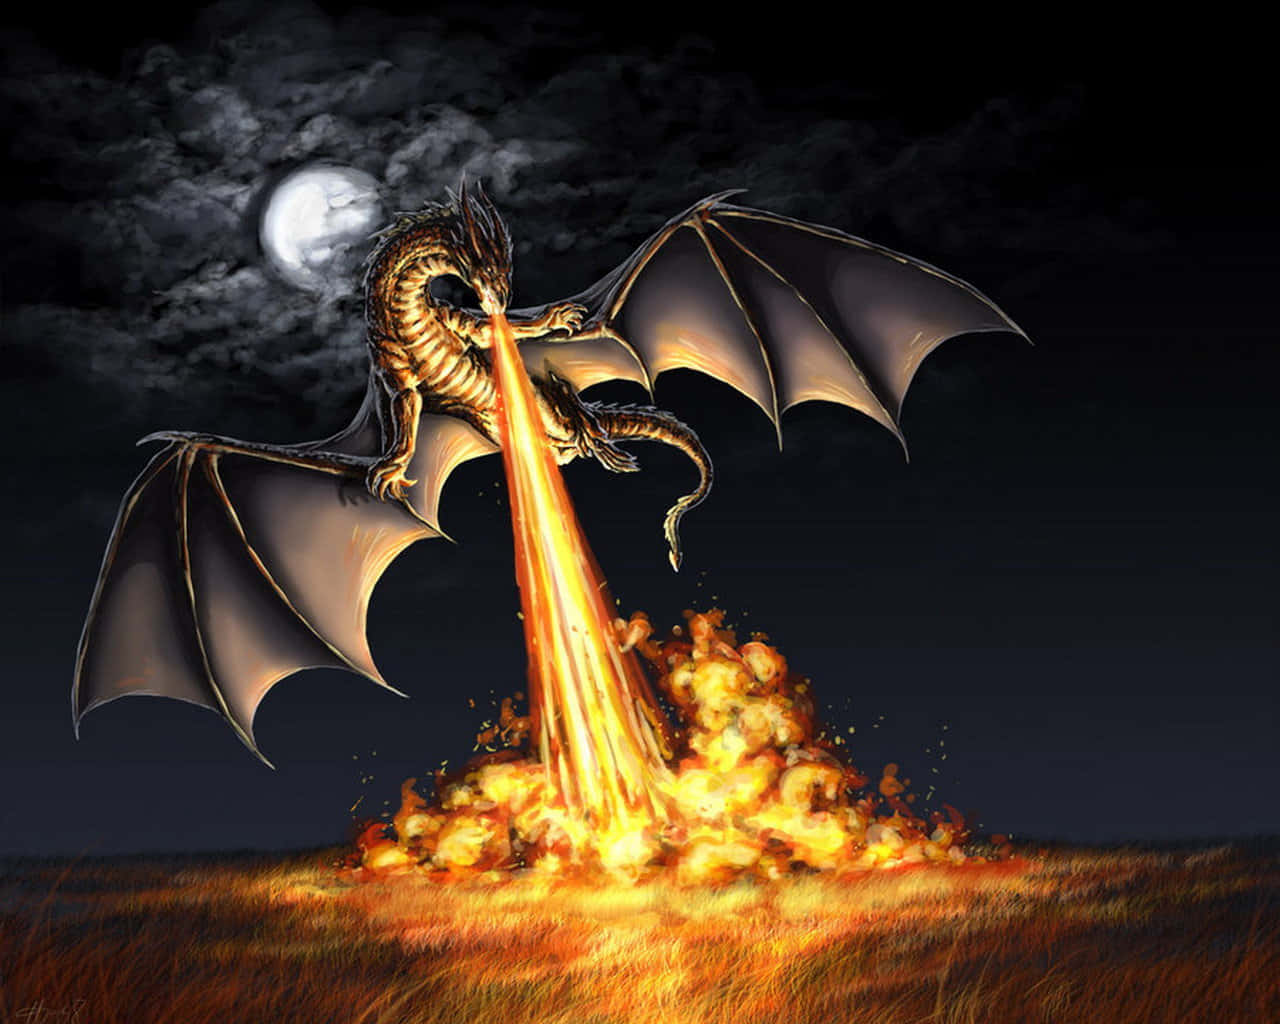 "Powerful Dragon Breathing Fire" Wallpaper